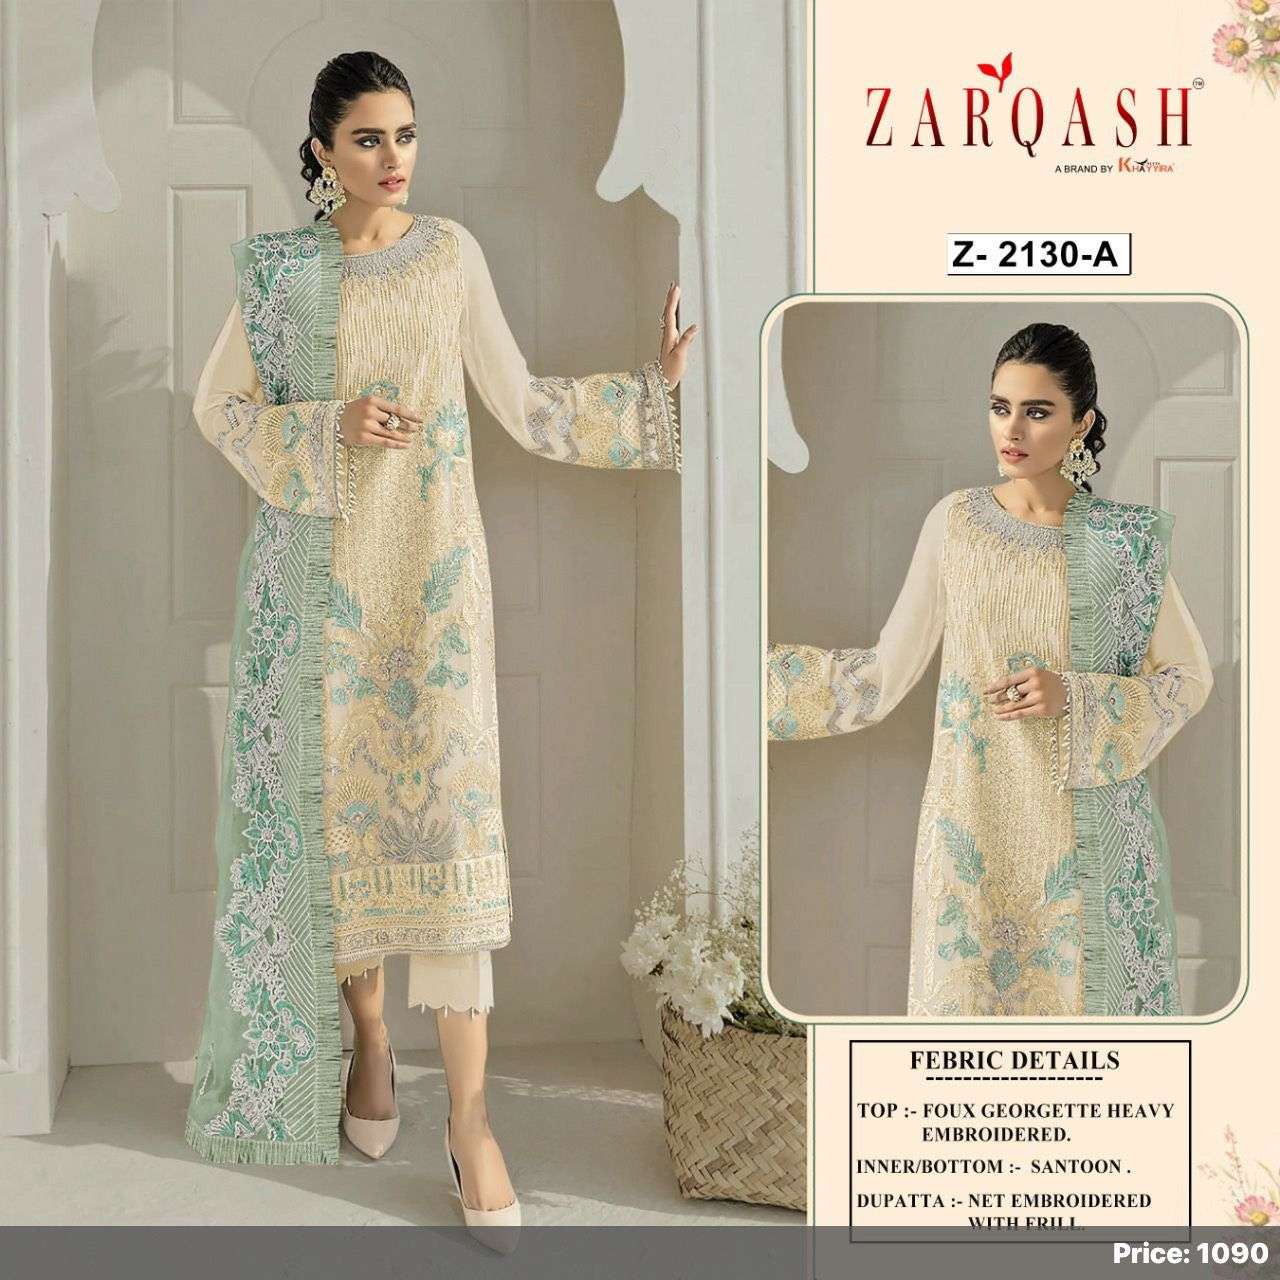 zarqash present mehak d no 2130 georgette pakistani designer suits